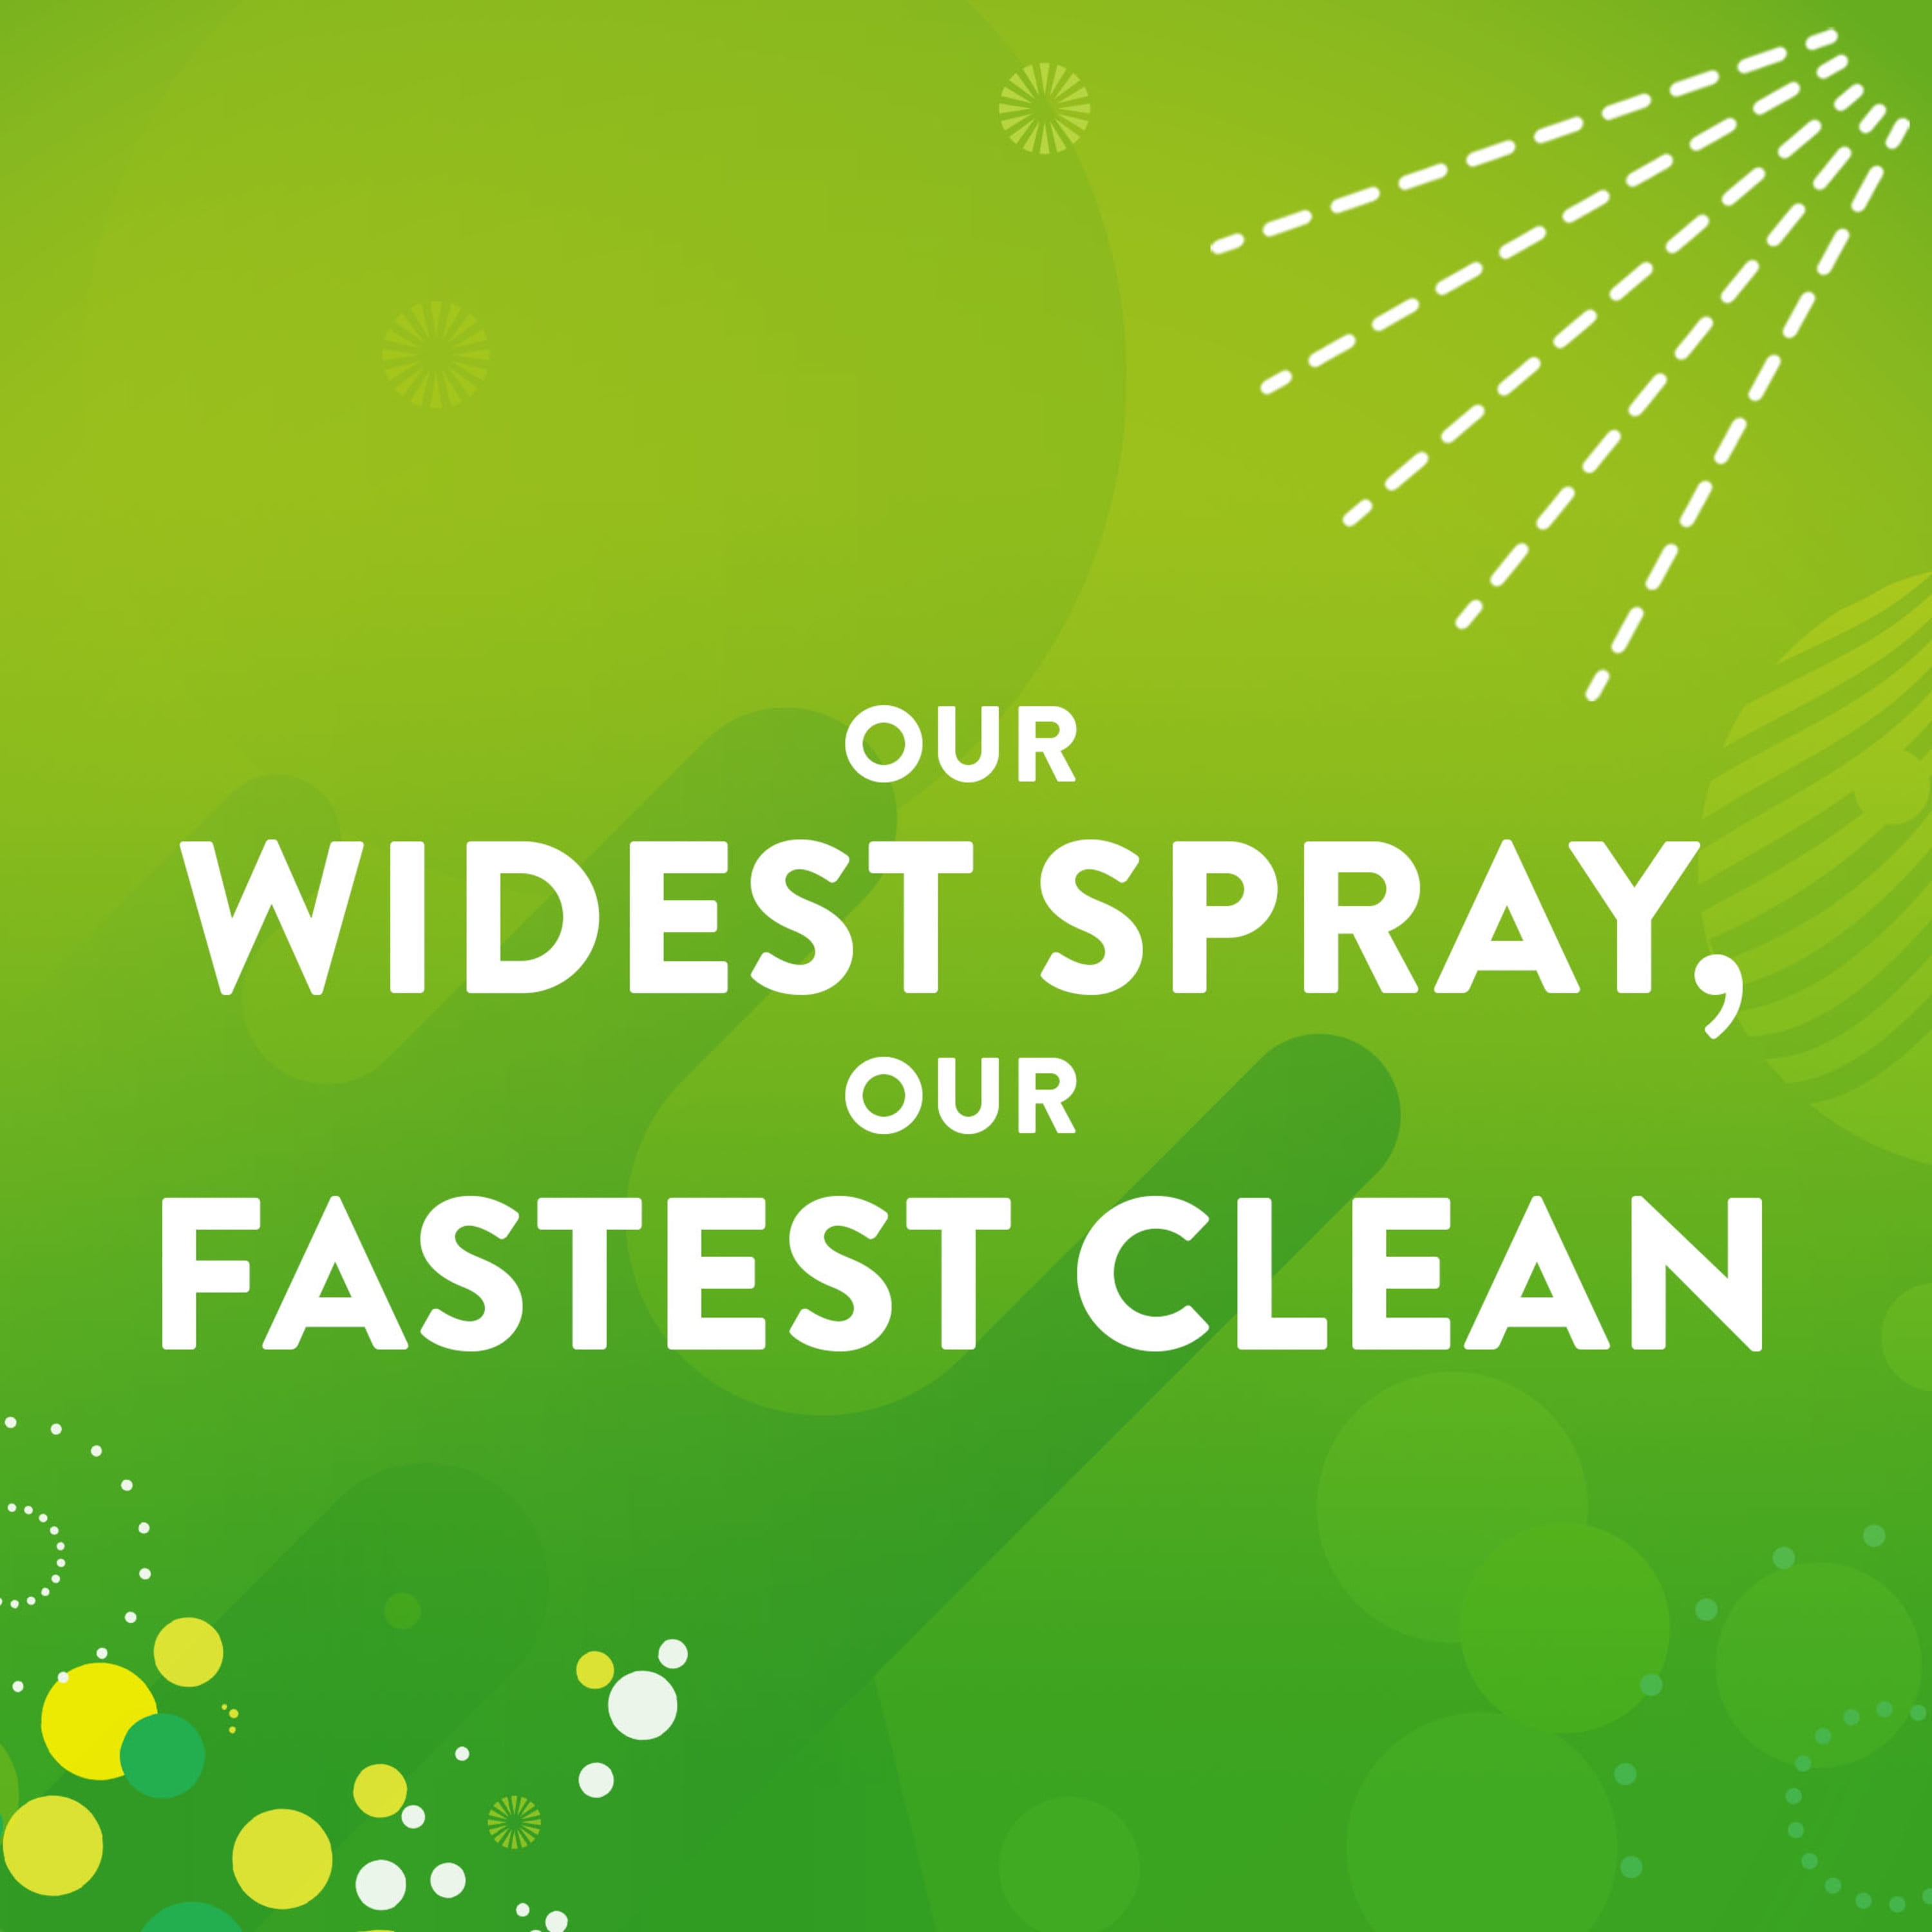 Scrubbing Bubbles Rainshower Scent Mega Shower Foamer Bathroom Cleaner  Spray - 32oz : Target